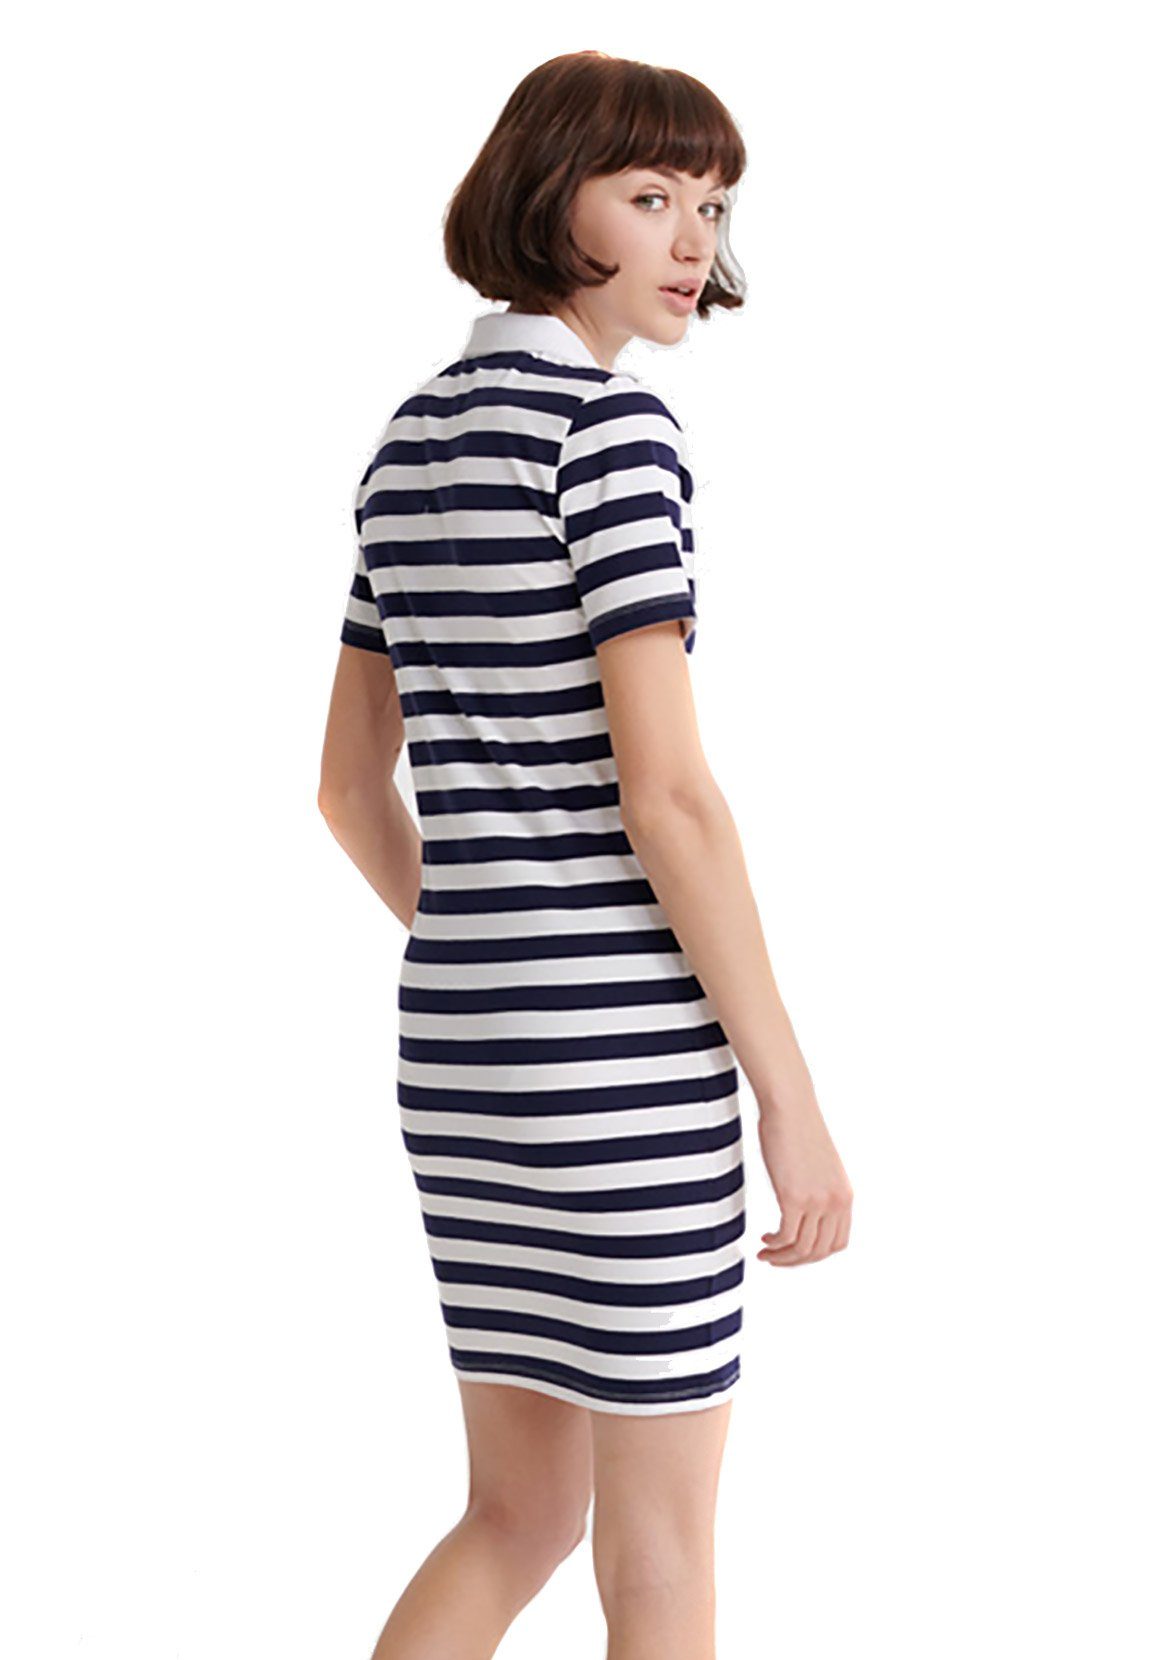 DRESS Sommerkleid Damen BODYCON Superdry RUGBY TILLY Superdry Stripe Navy Kleid